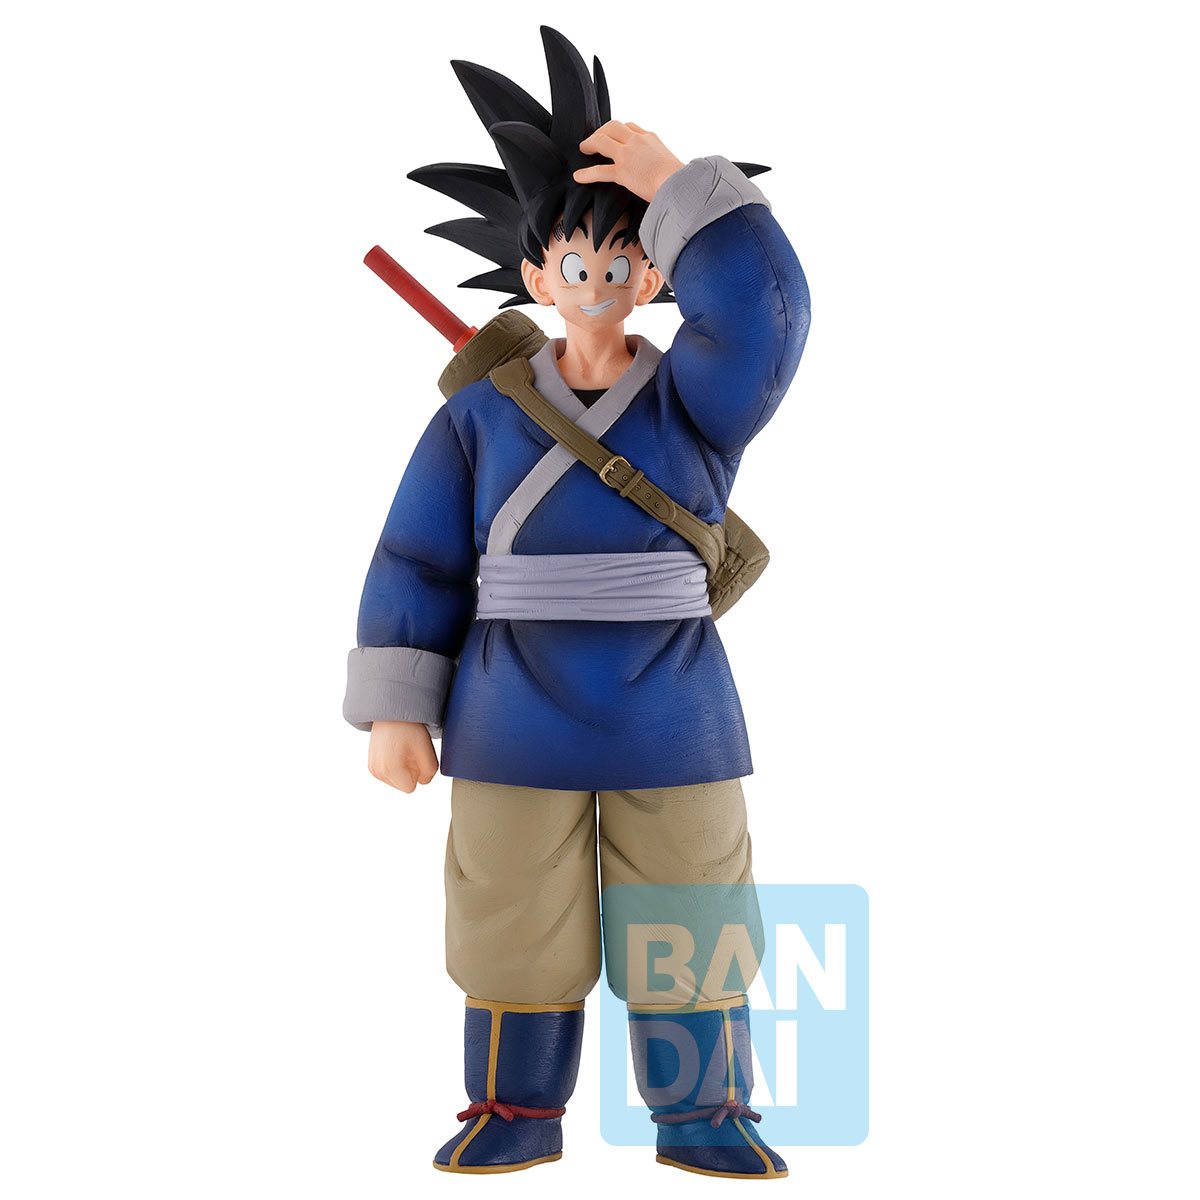 Dragon Ball Z Goku Clothes Backpack - Entertainment Earth